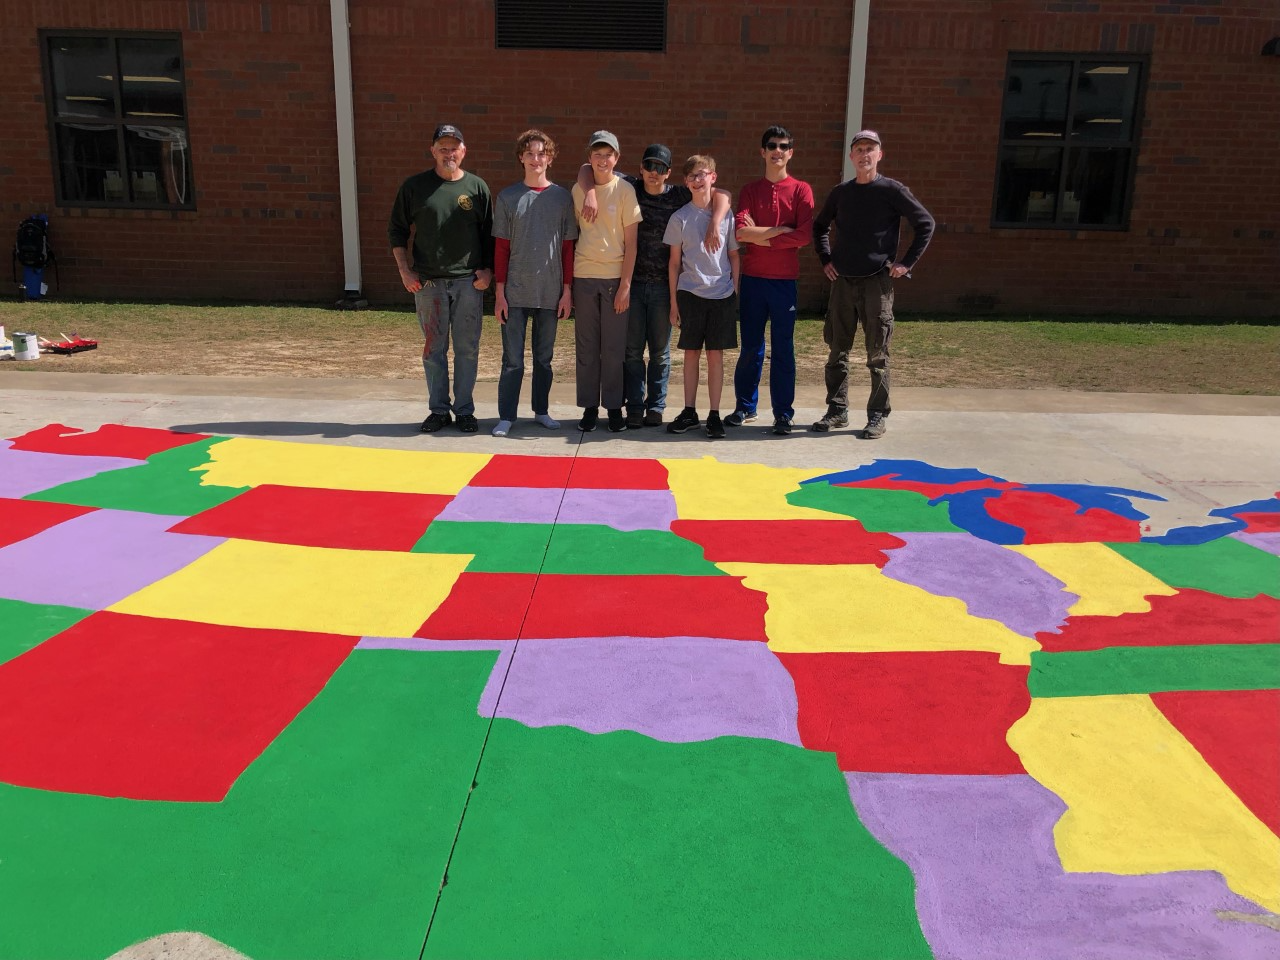 Trussville's Boy Scouts paints U.S. map for Paine Elementary School